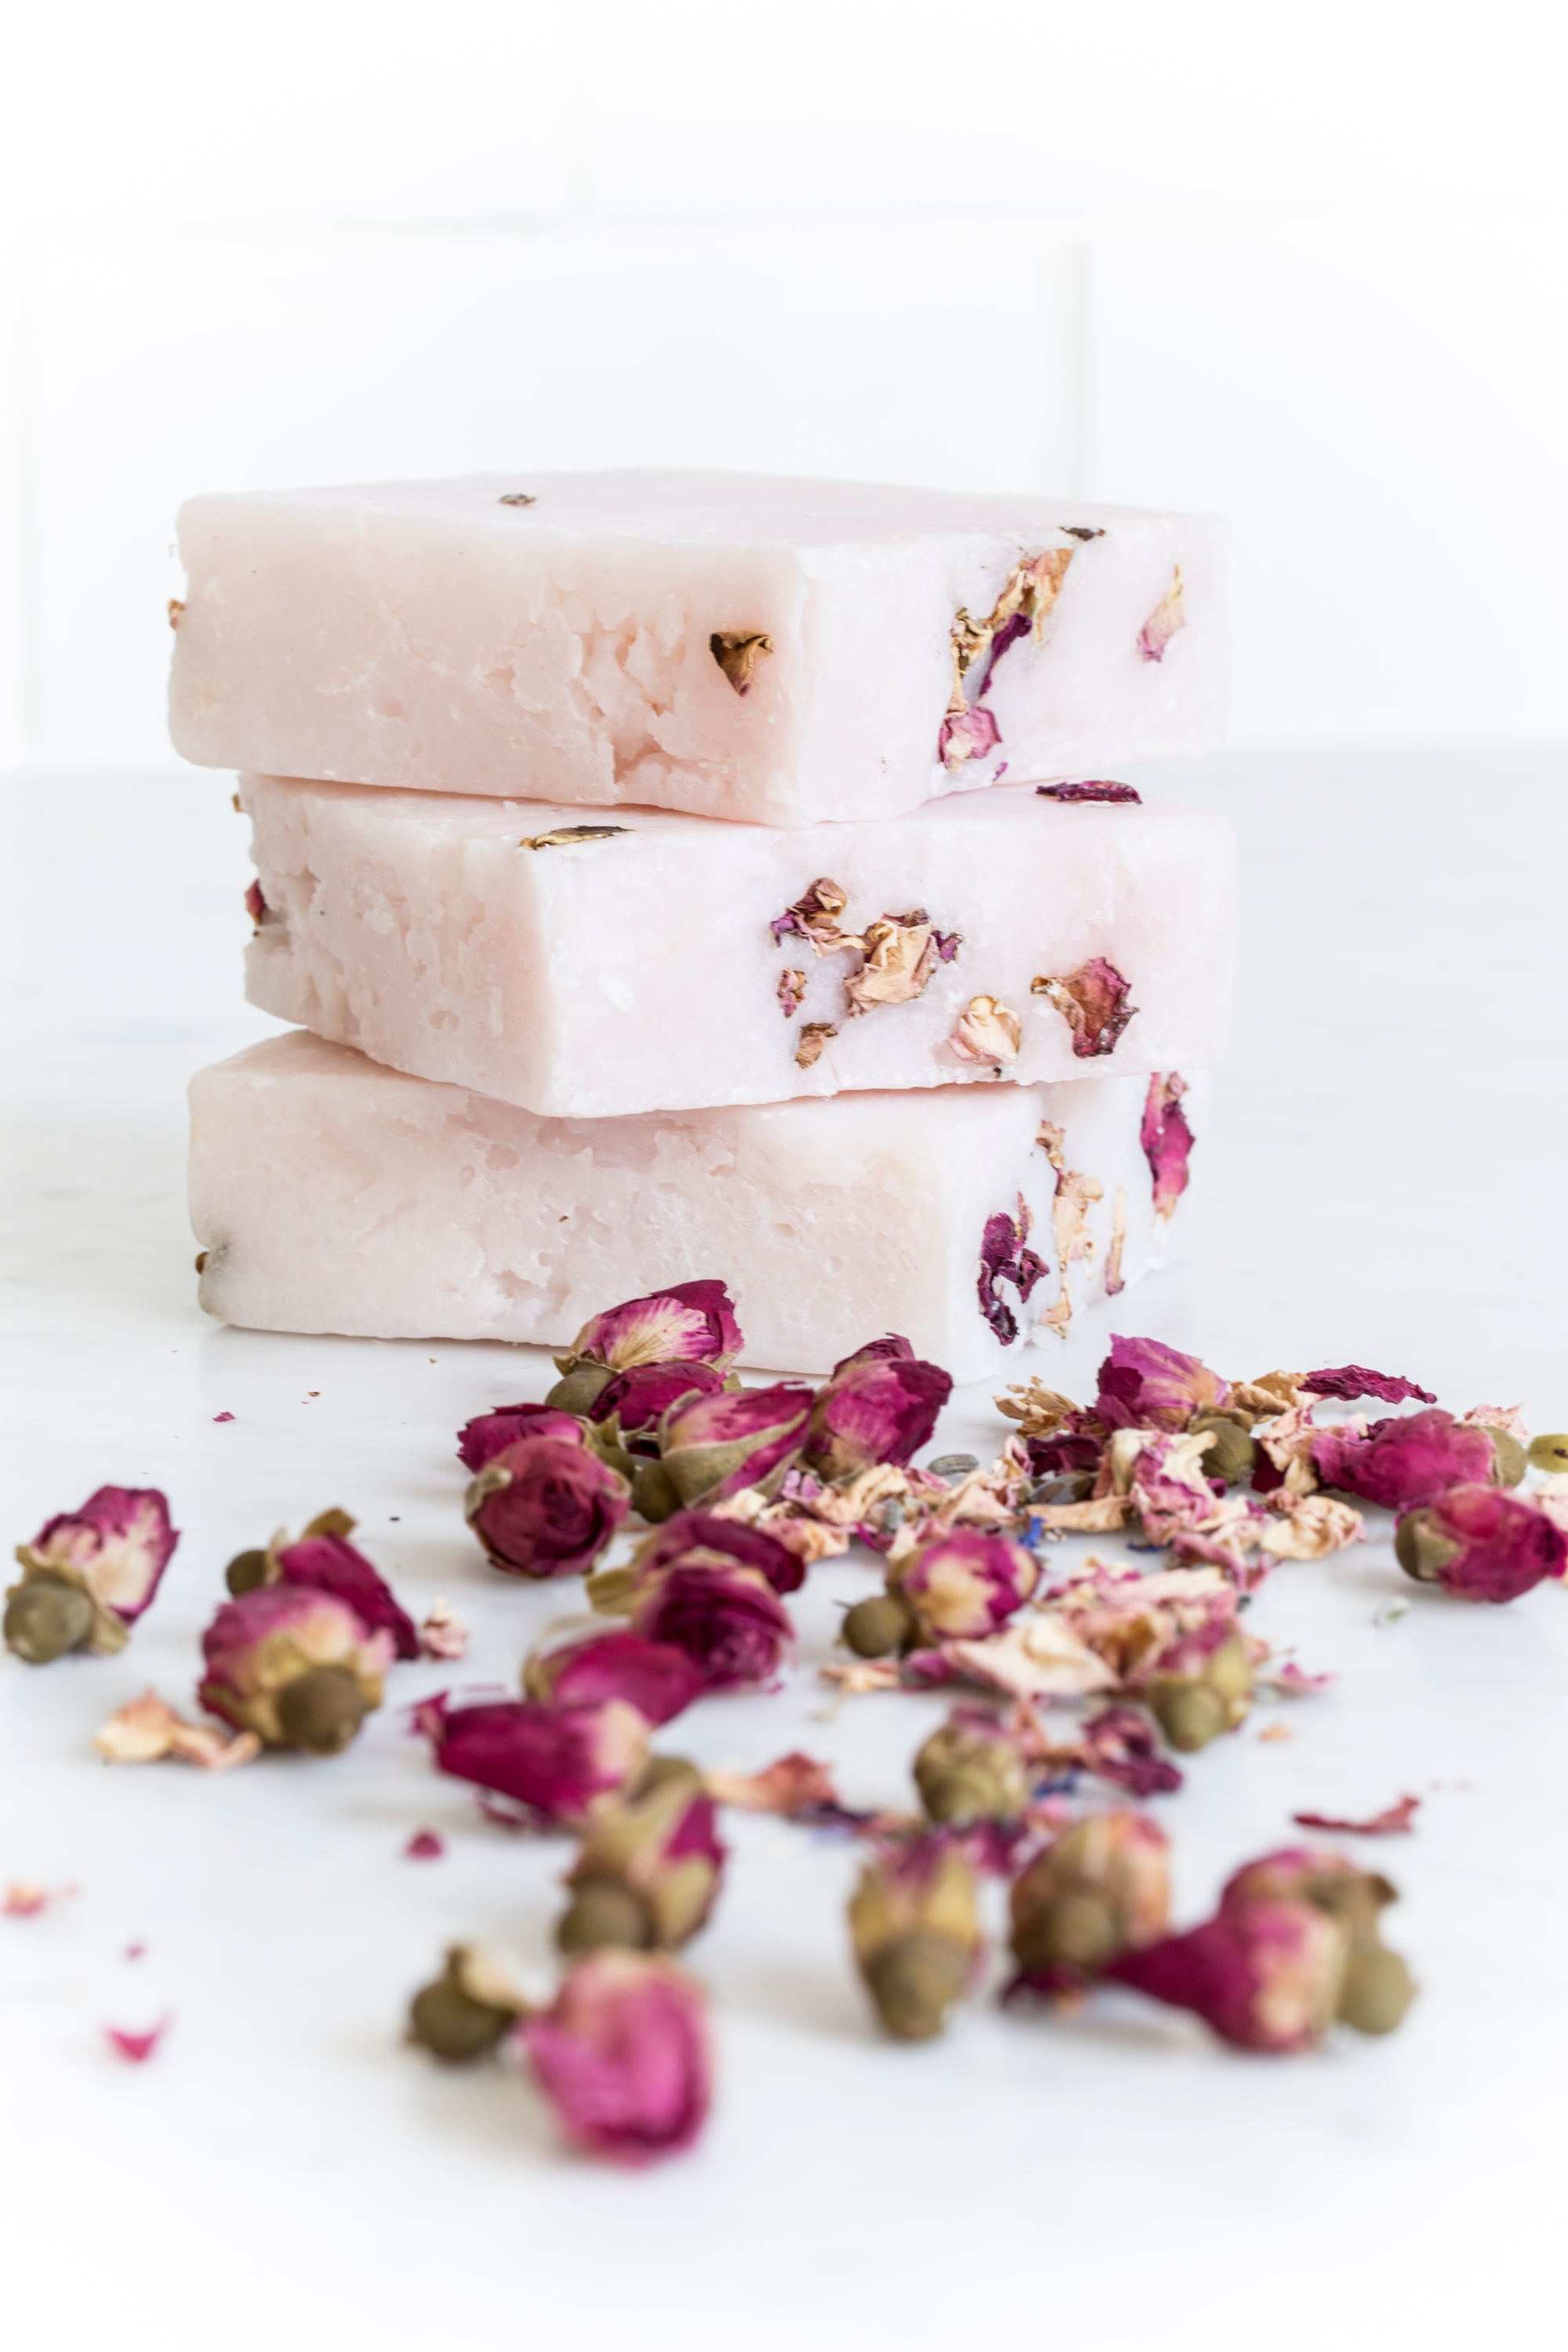 Handmade Soap Bar - Rose Geranium